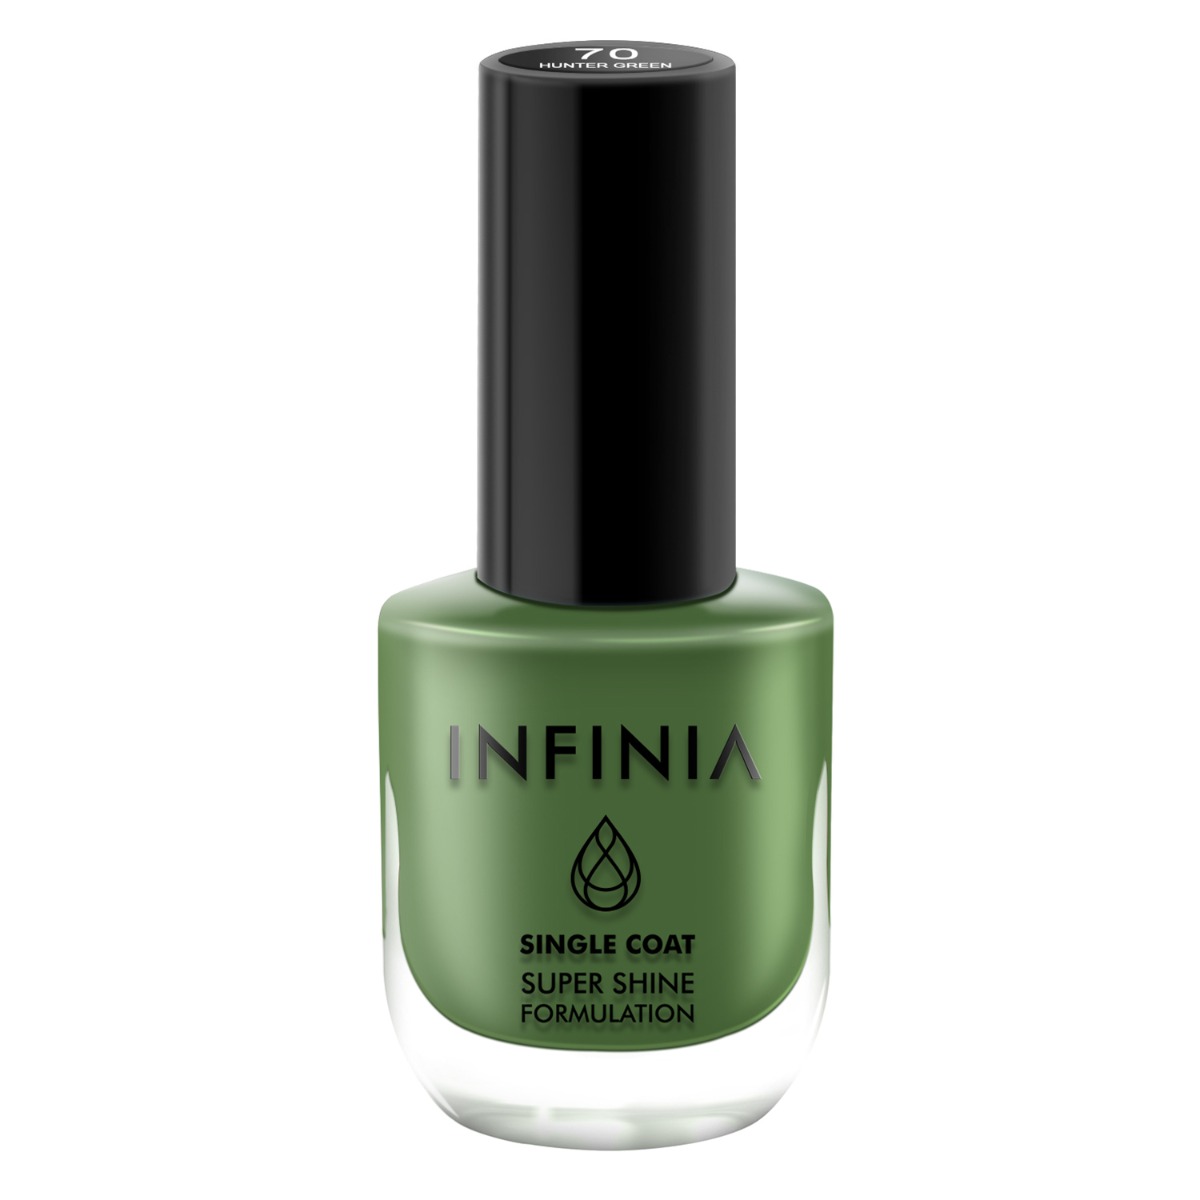 INFINIA Single Coat Super Shine Nail Polish With Ultra High Gloss, 12ml-070 Hunter Green